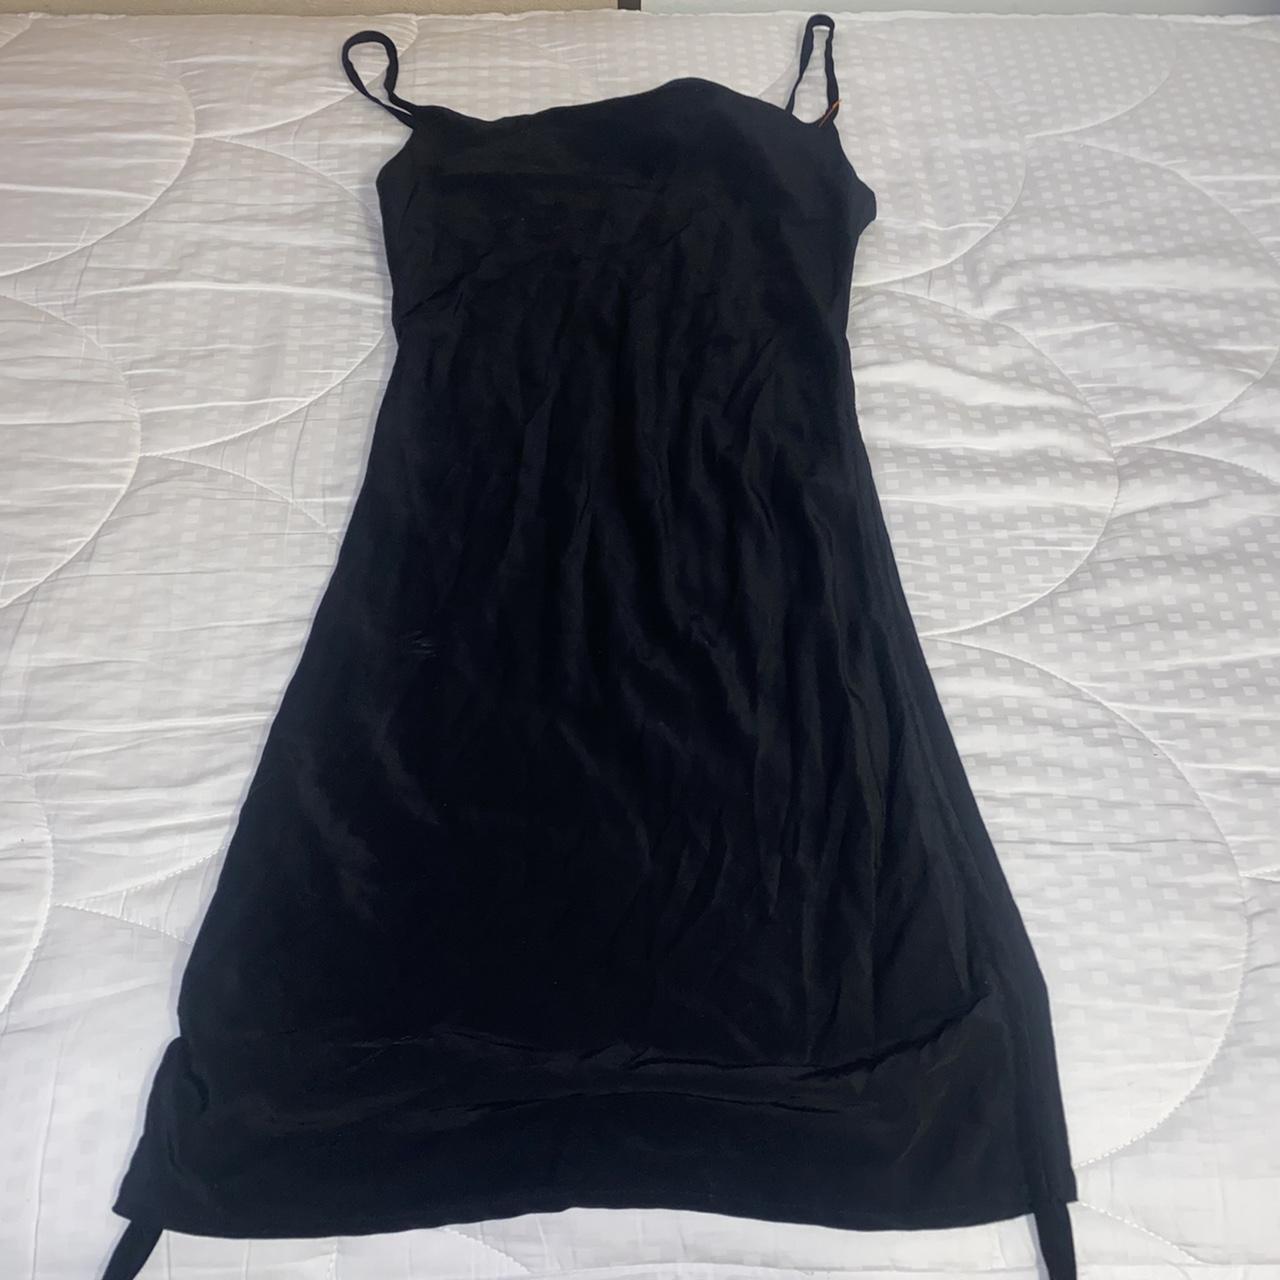 shirt midi length cowl neck little black dress w/... - Depop